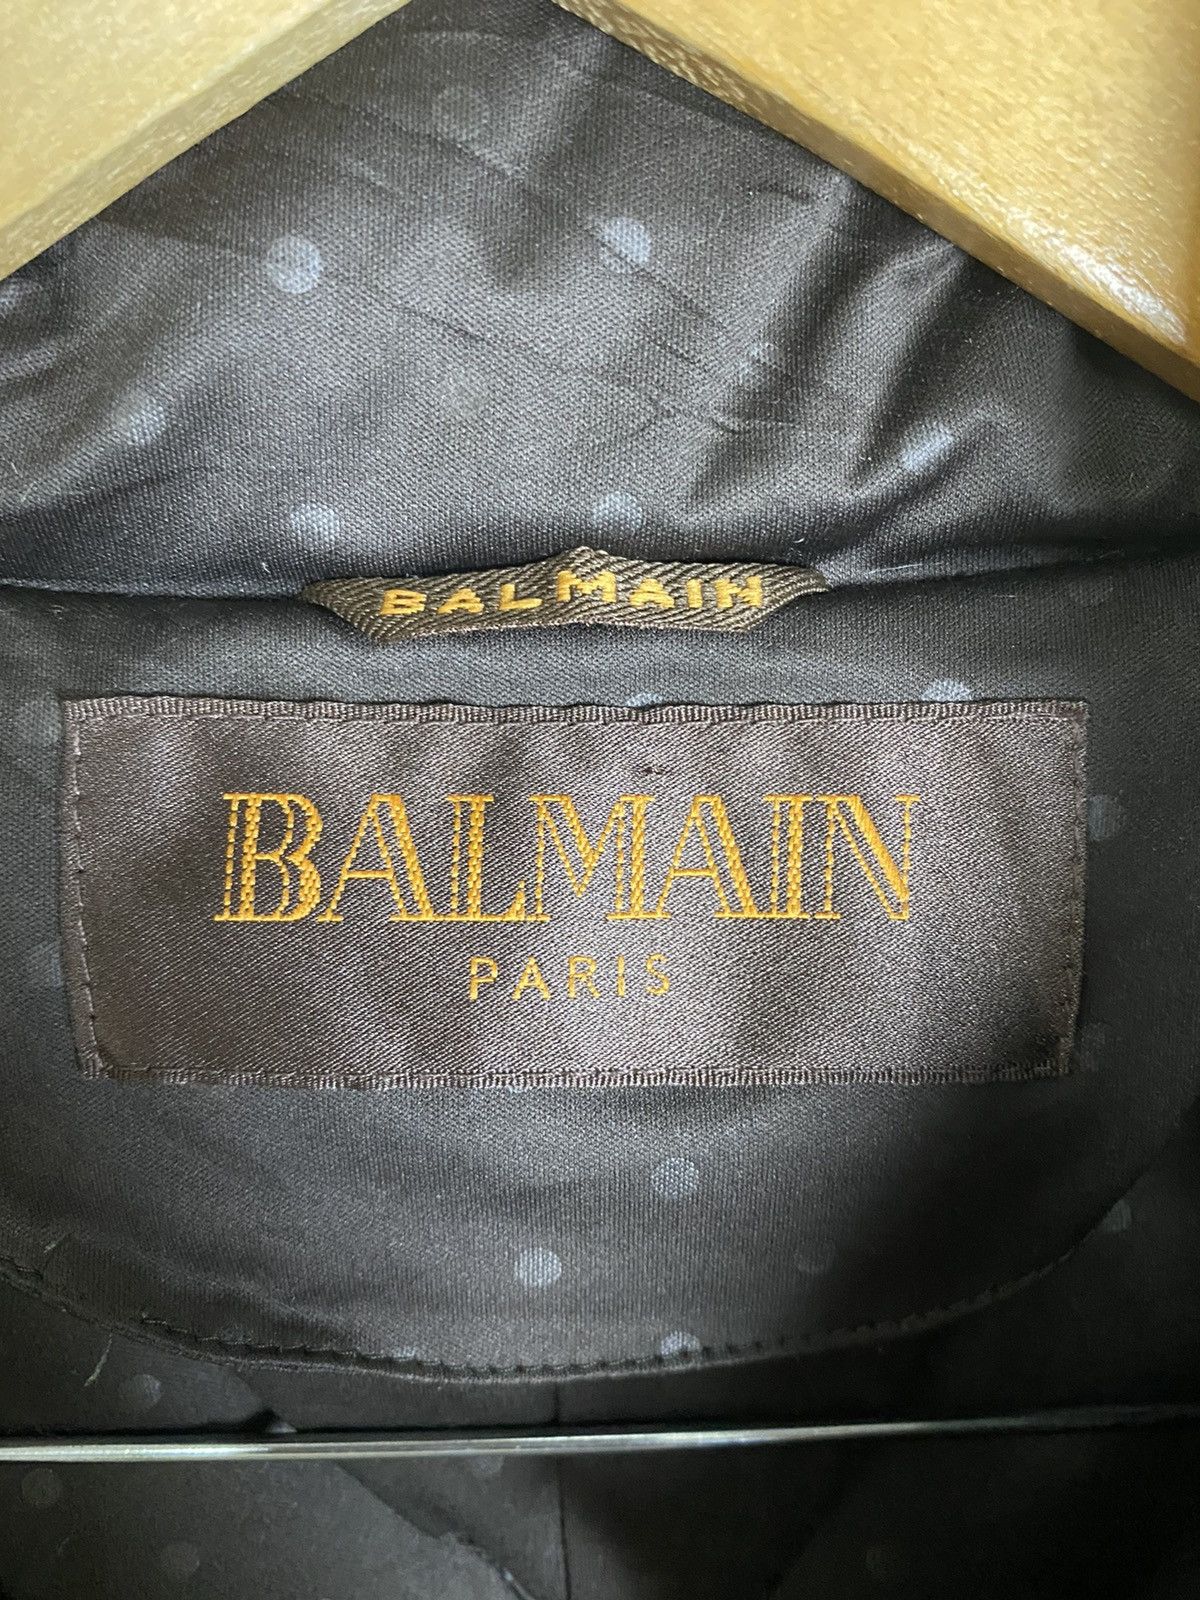 BALMAIN PARIS Polka Dot Women's Puffer Jacket - 9